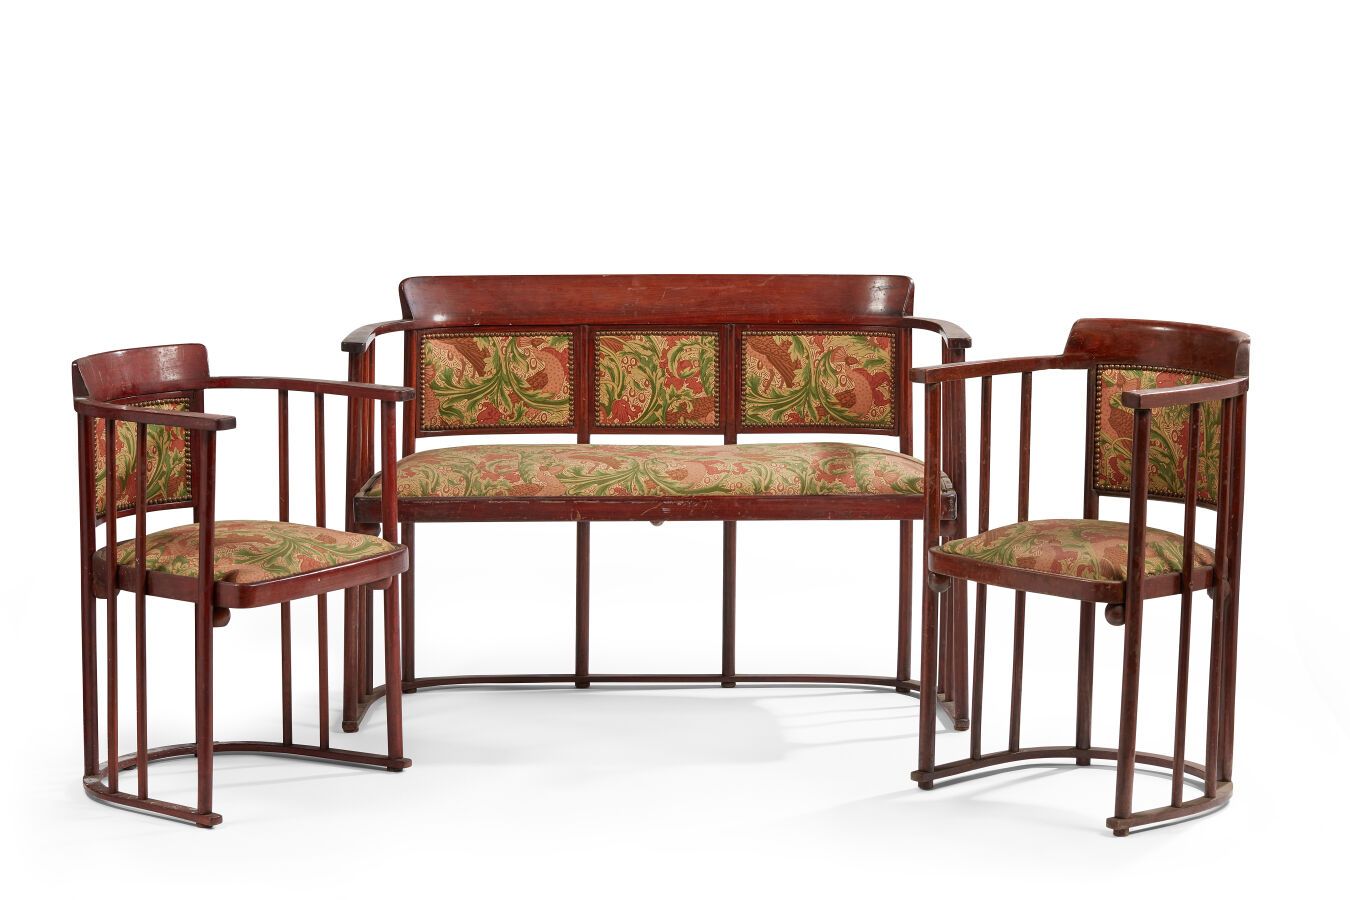 Null 约瑟夫-霍夫曼和J.&J.科恩（归于）。

起居室家具，包括各种型号的长椅和扶手椅

一些座位背面的标签

清漆木材

55 x 121 x 52厘米&hellip;